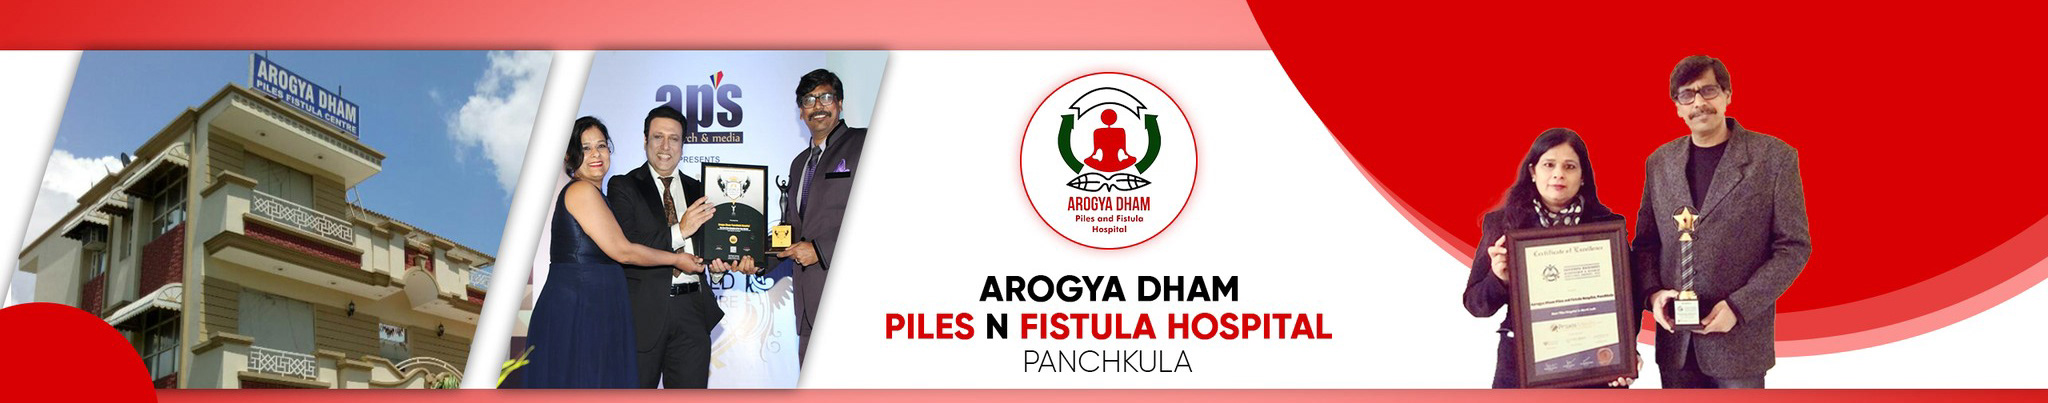 Banner de perfil de Arogya Dham Pkl